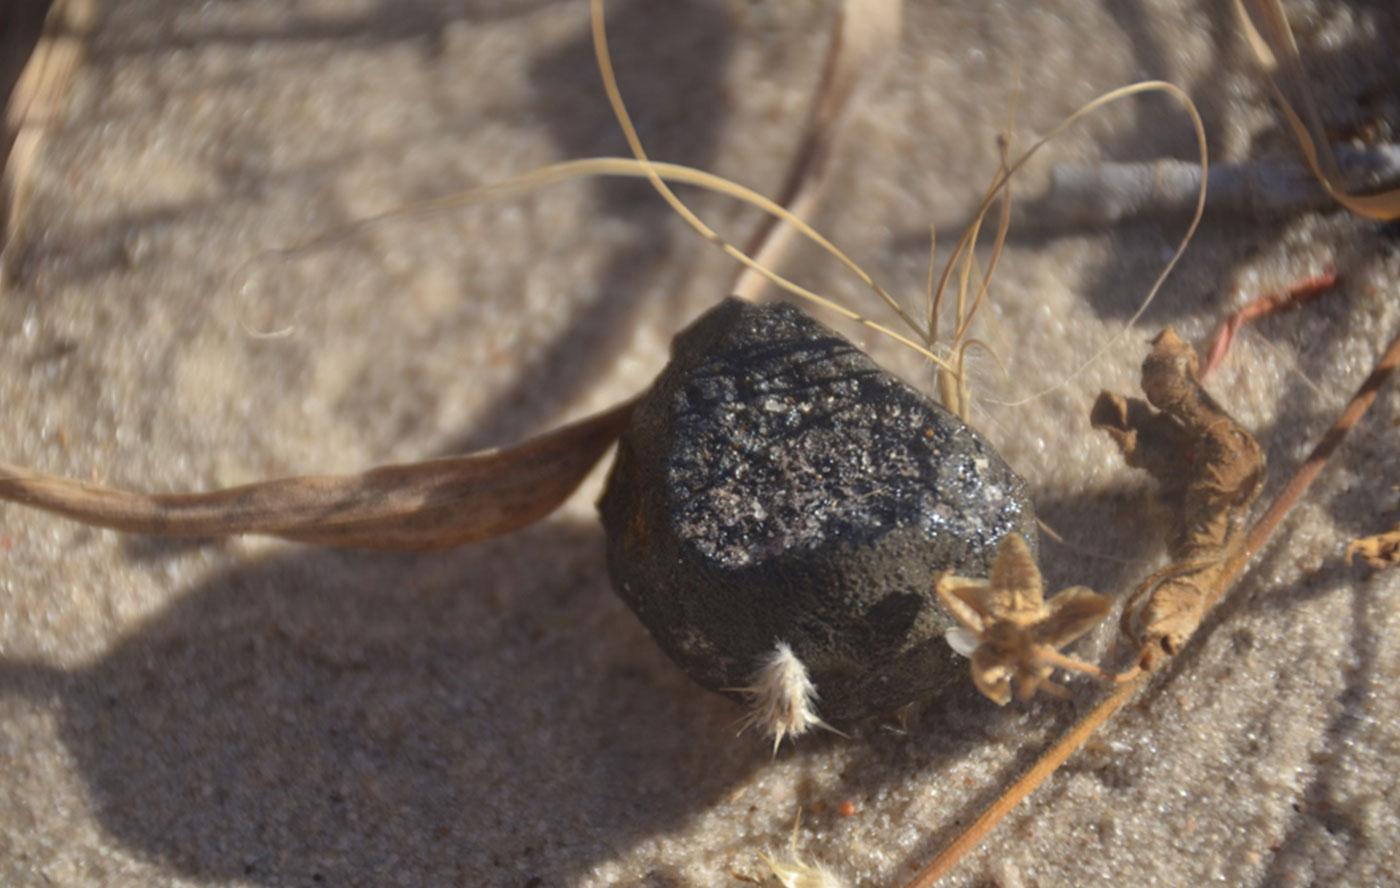 Image of small meteorite found in Botswana against sandy ground